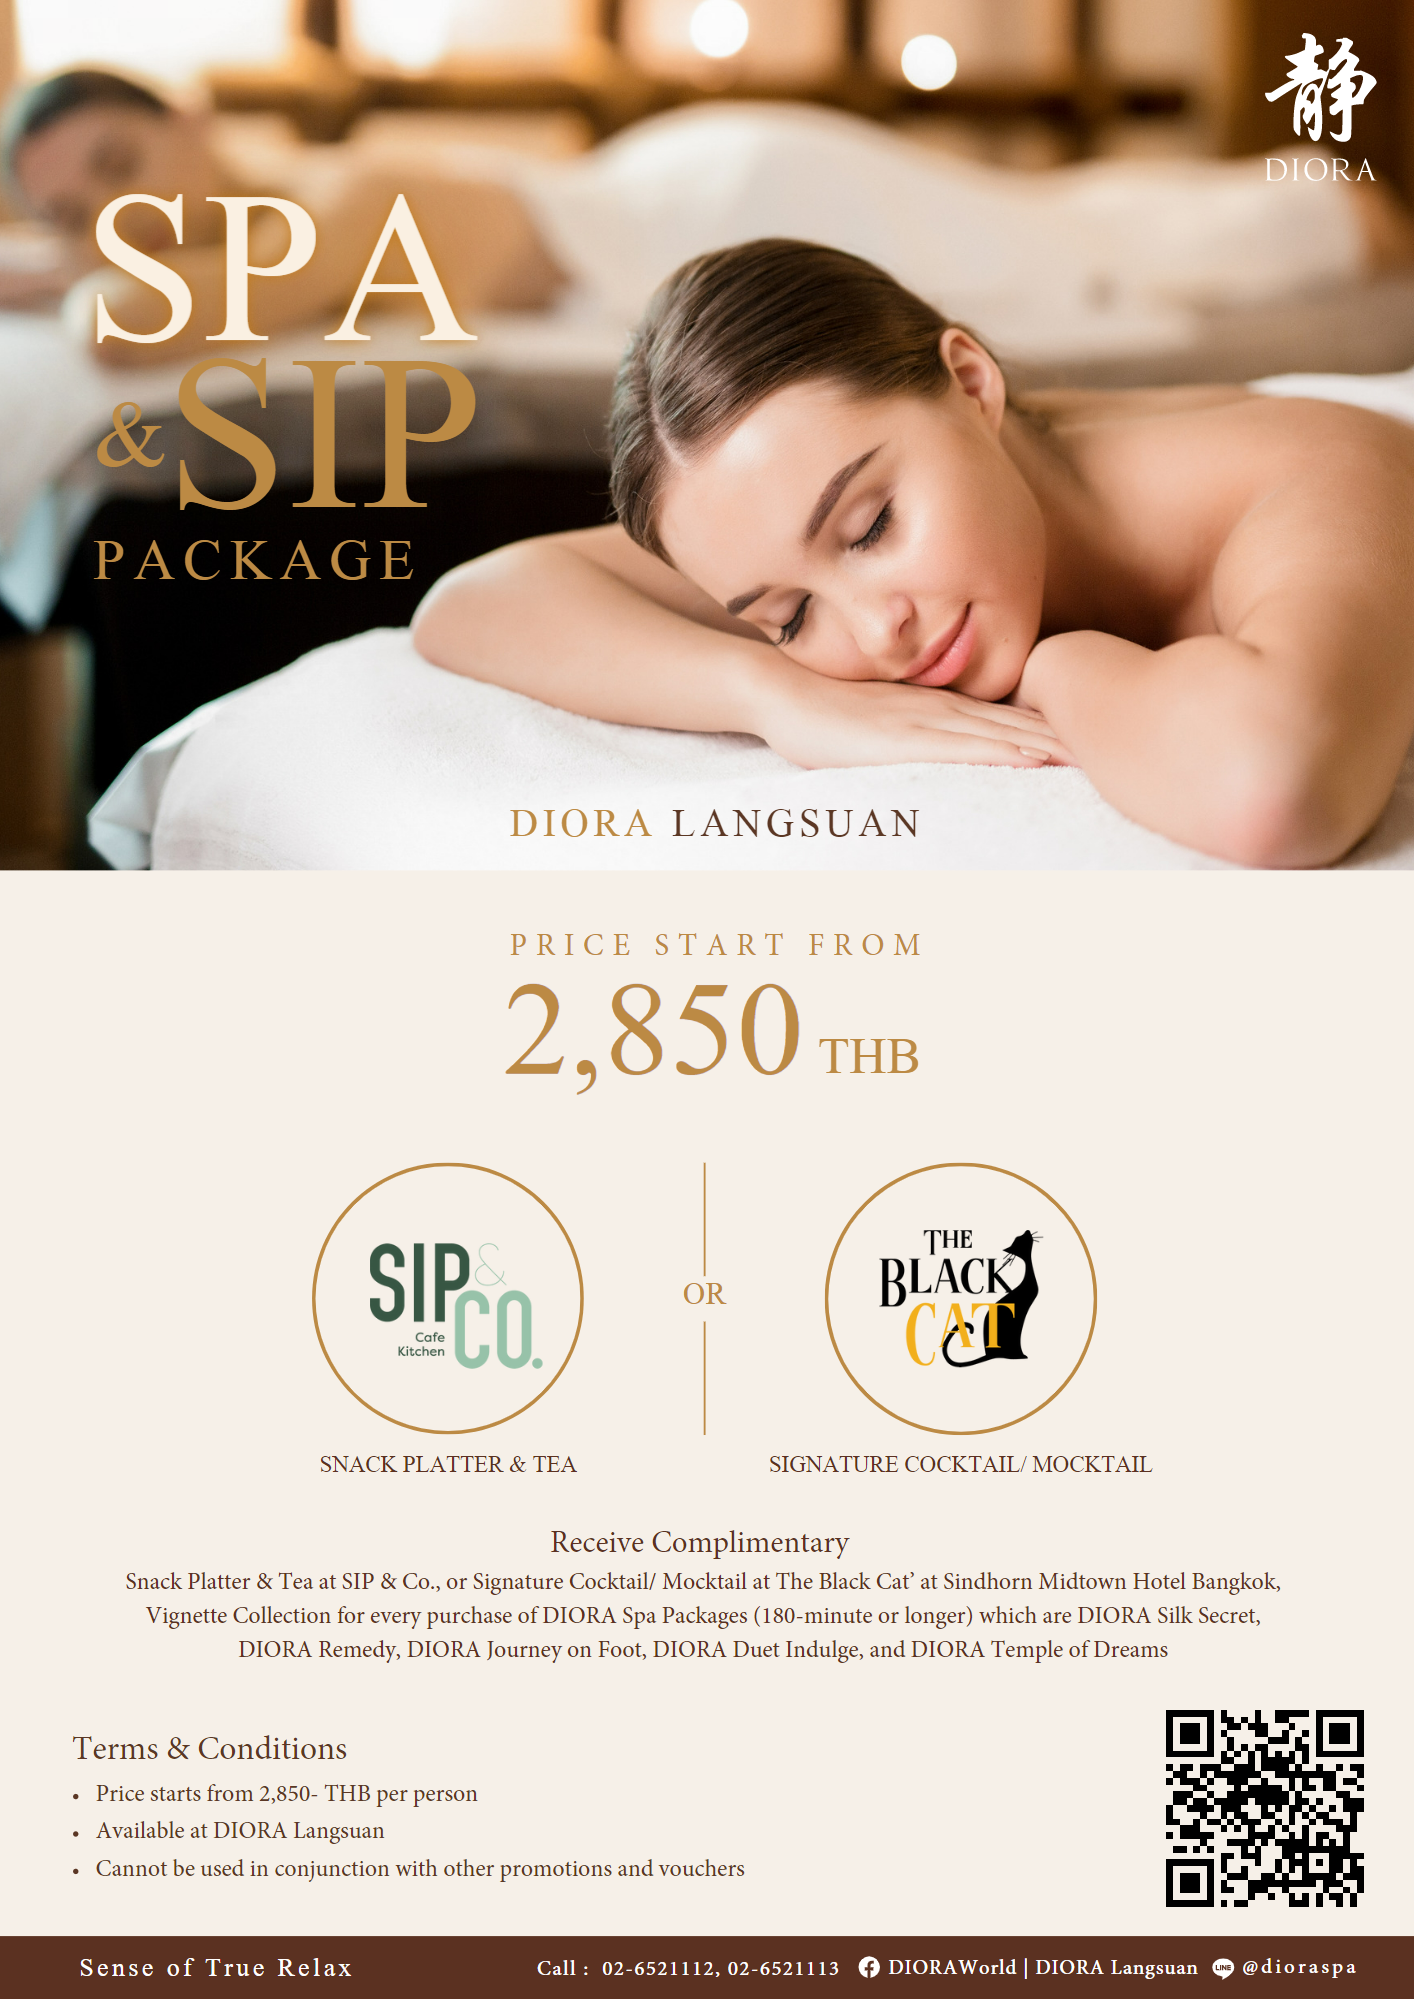 SPA & SIP Package (DIORA Langsuan)